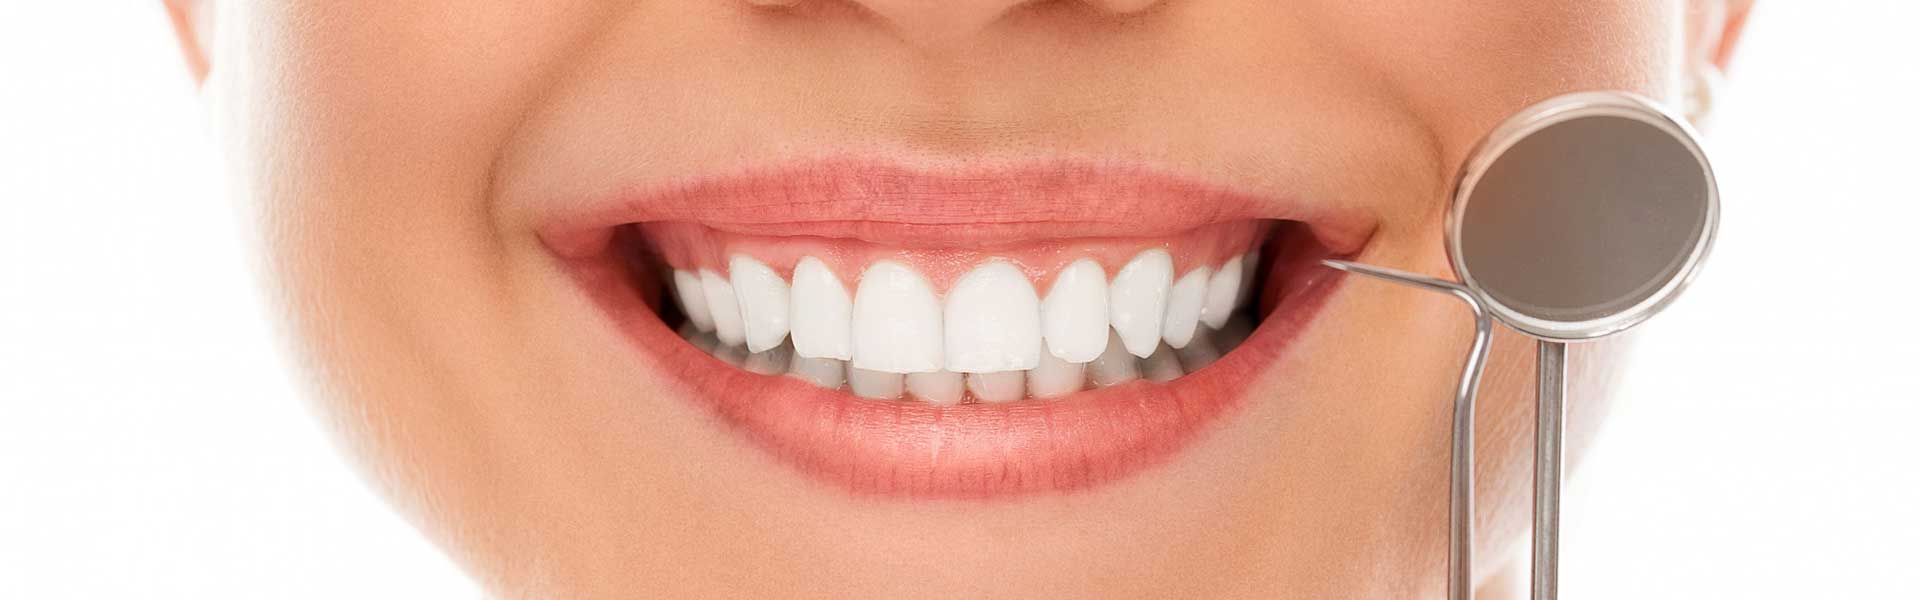 Sonrisa estética - Clínica dental Brasilocho - Clínica dental Cádiz - Odontología - Dentistas en Cádiz